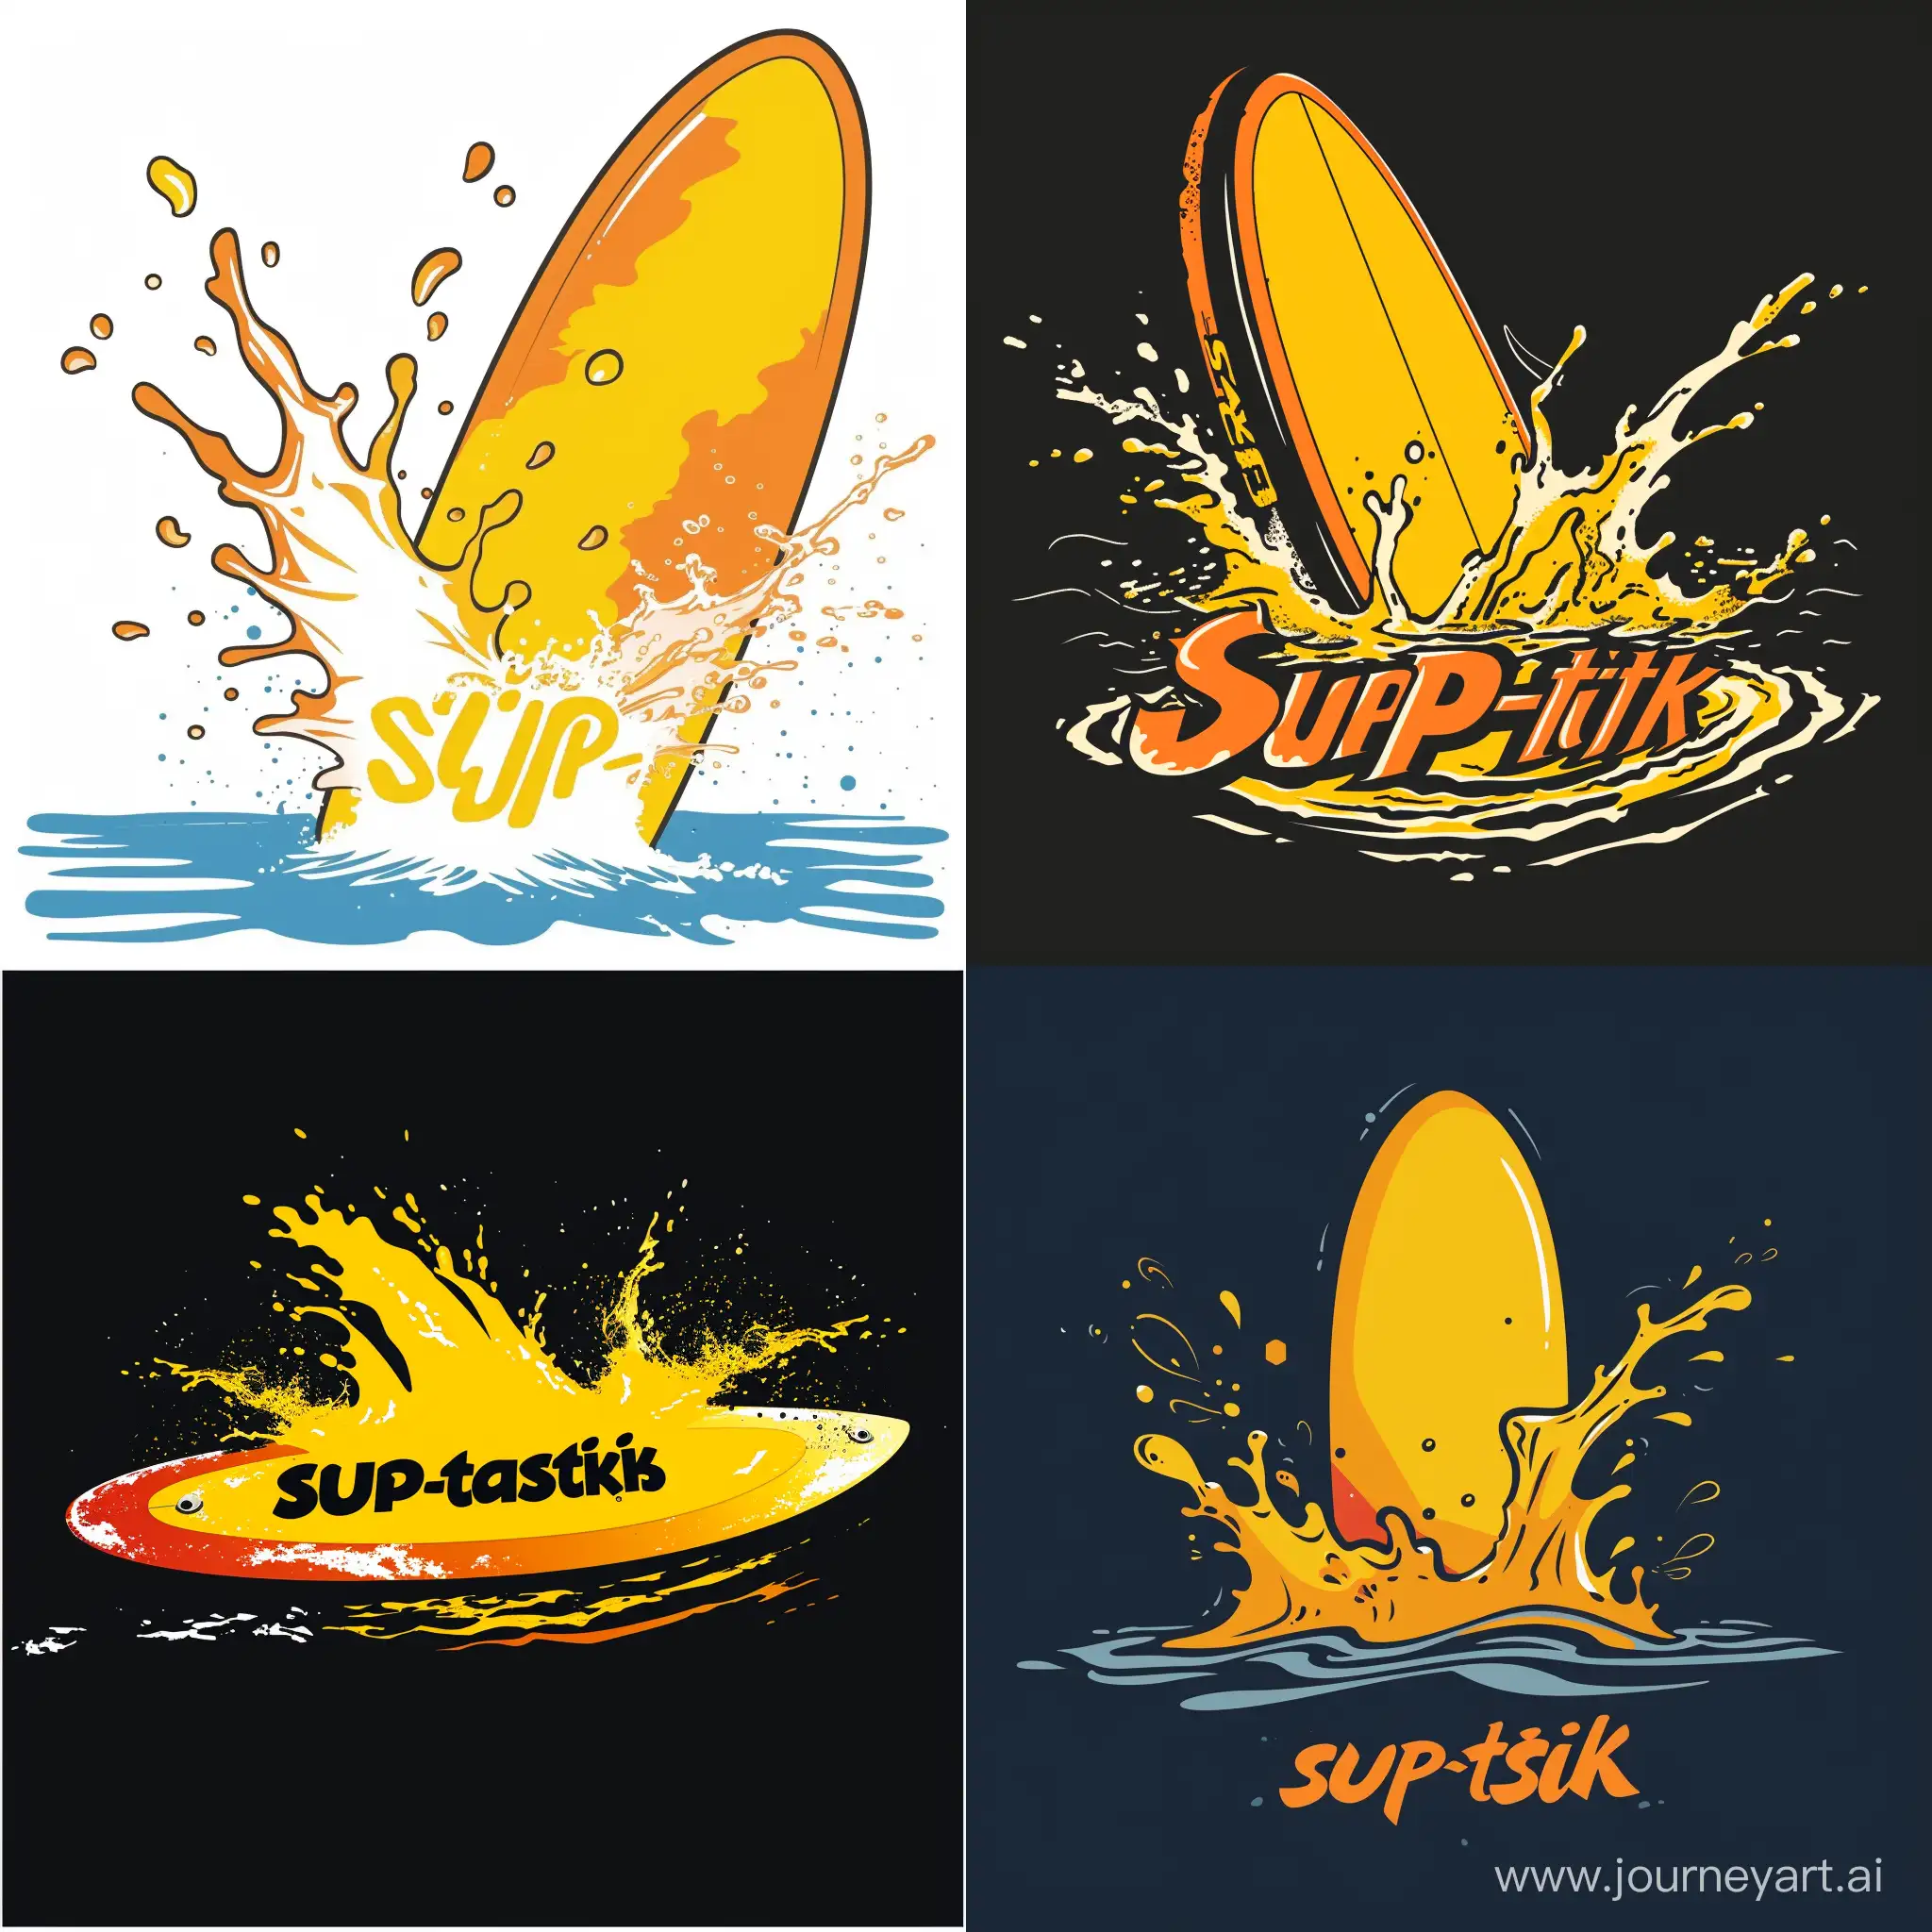 Vibrant-Yellow-and-Orange-SUP-Board-Splashing-in-Water-for-SUPtastisk-Logo